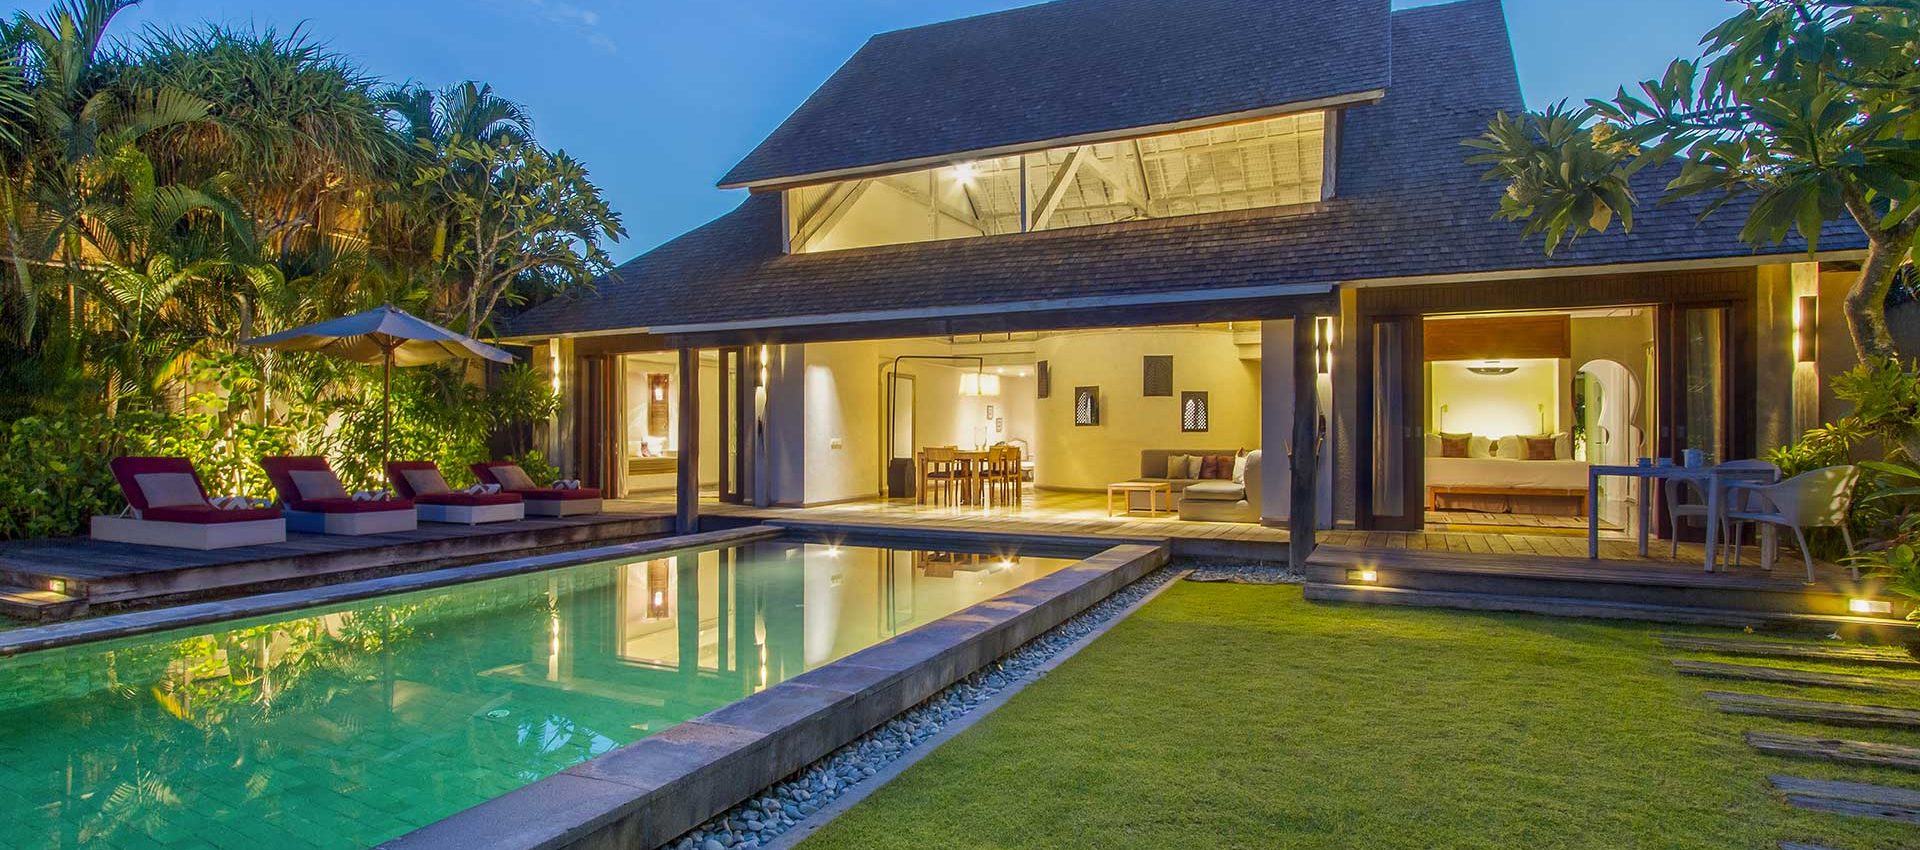 Space Villas Bali Pool And Garden at Night